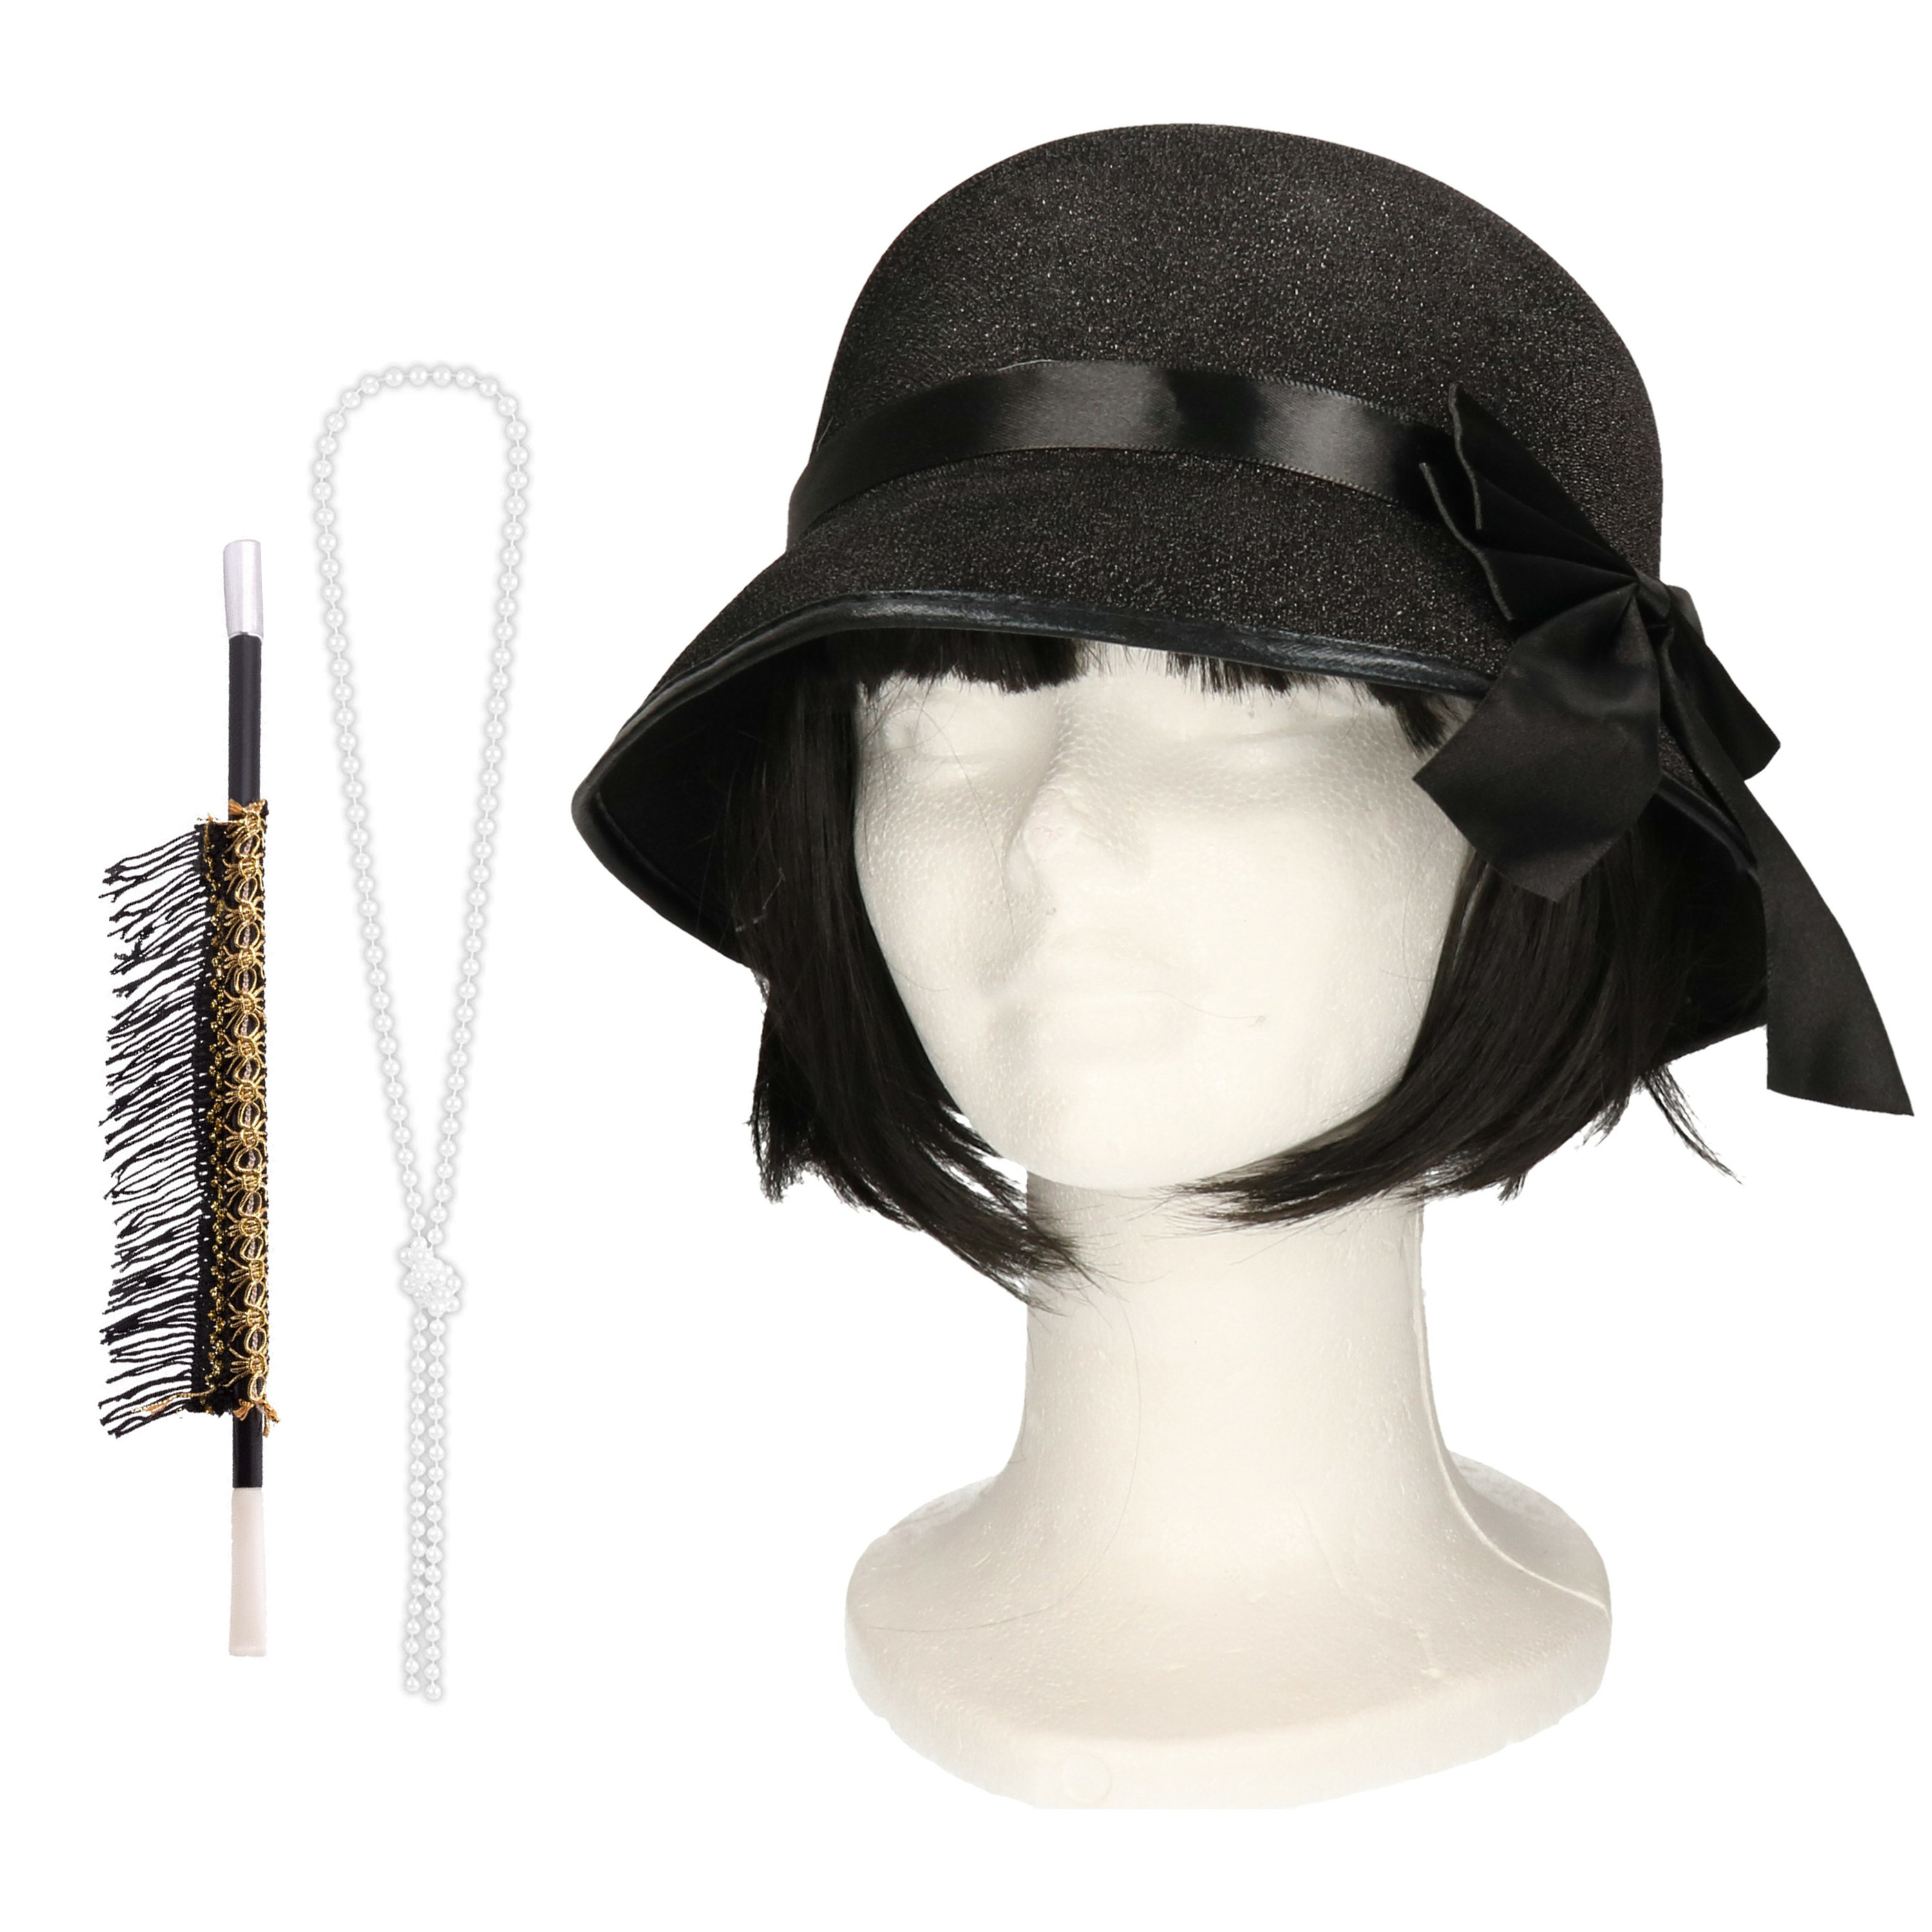 Carnaval verkleed accessoire set sigarettenhouder-parelketting-hoed charleston-jaren 20 stijl